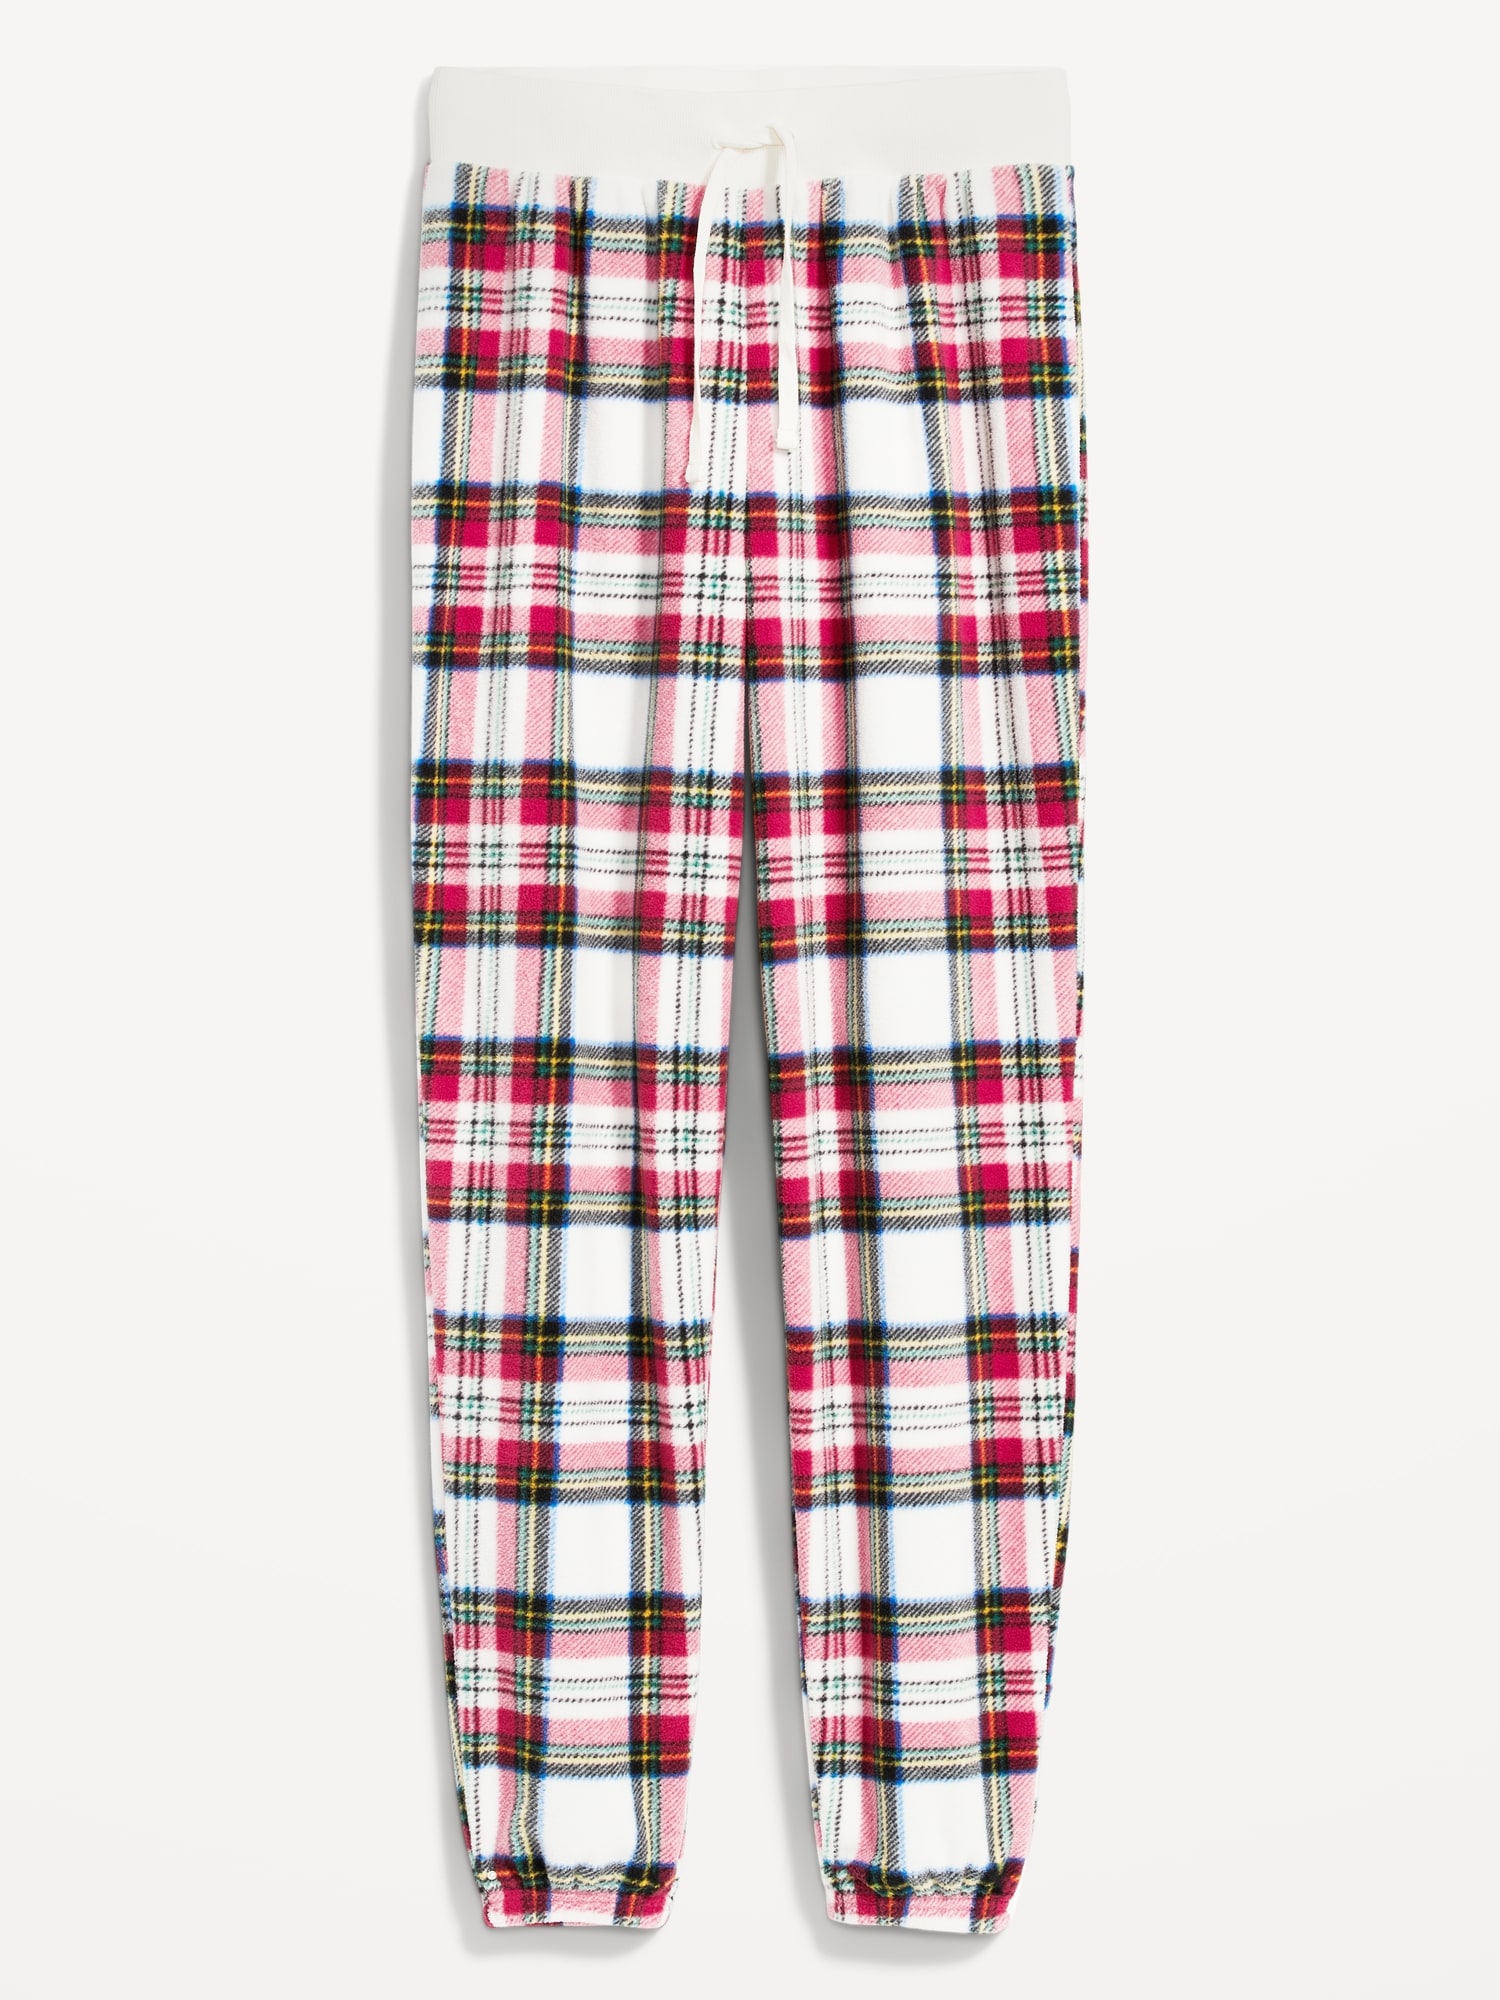 High-Waisted Micro Fleece Pajama Jogger Pants for Women | Old Navy